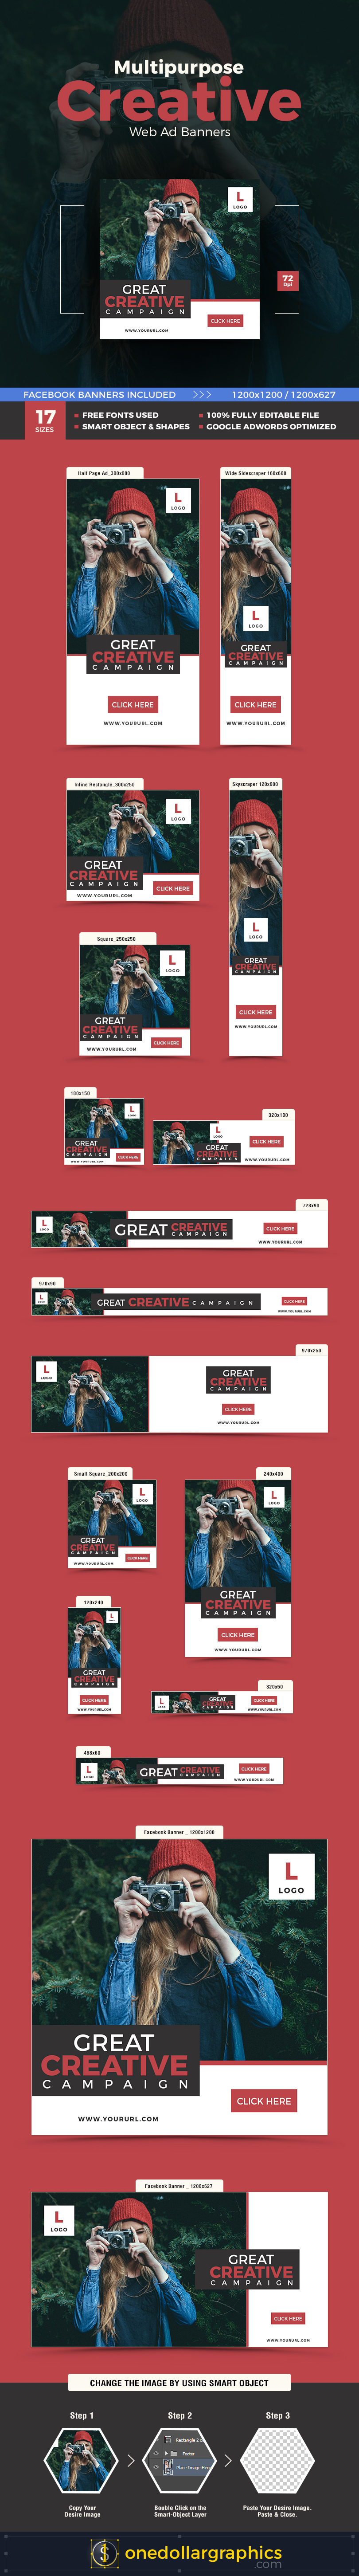 Multipurpose-Creative-Web-Ad-Banners-1